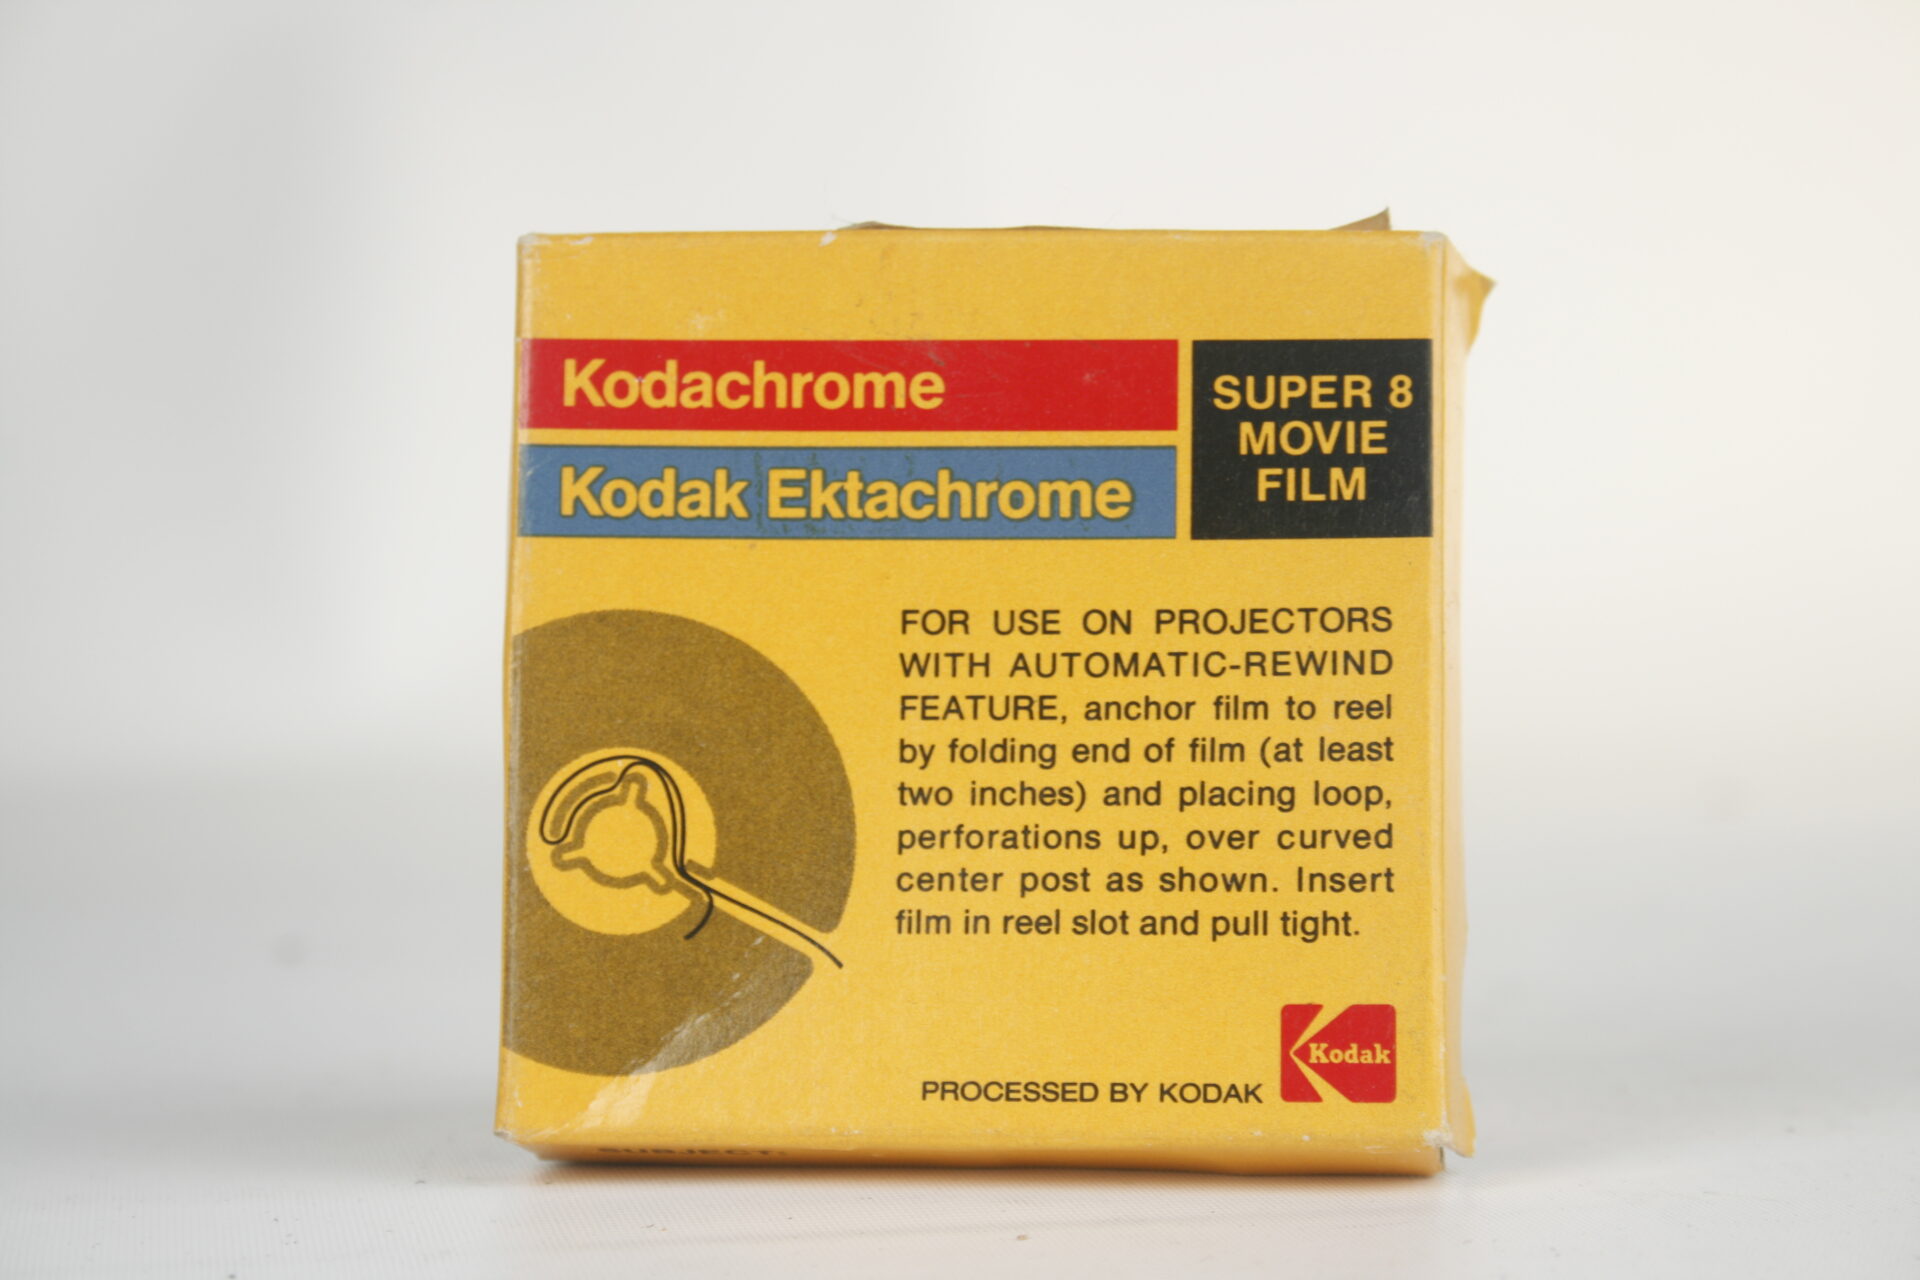 Kodak Kodachrome Ektachrome. Super 8 movie film.